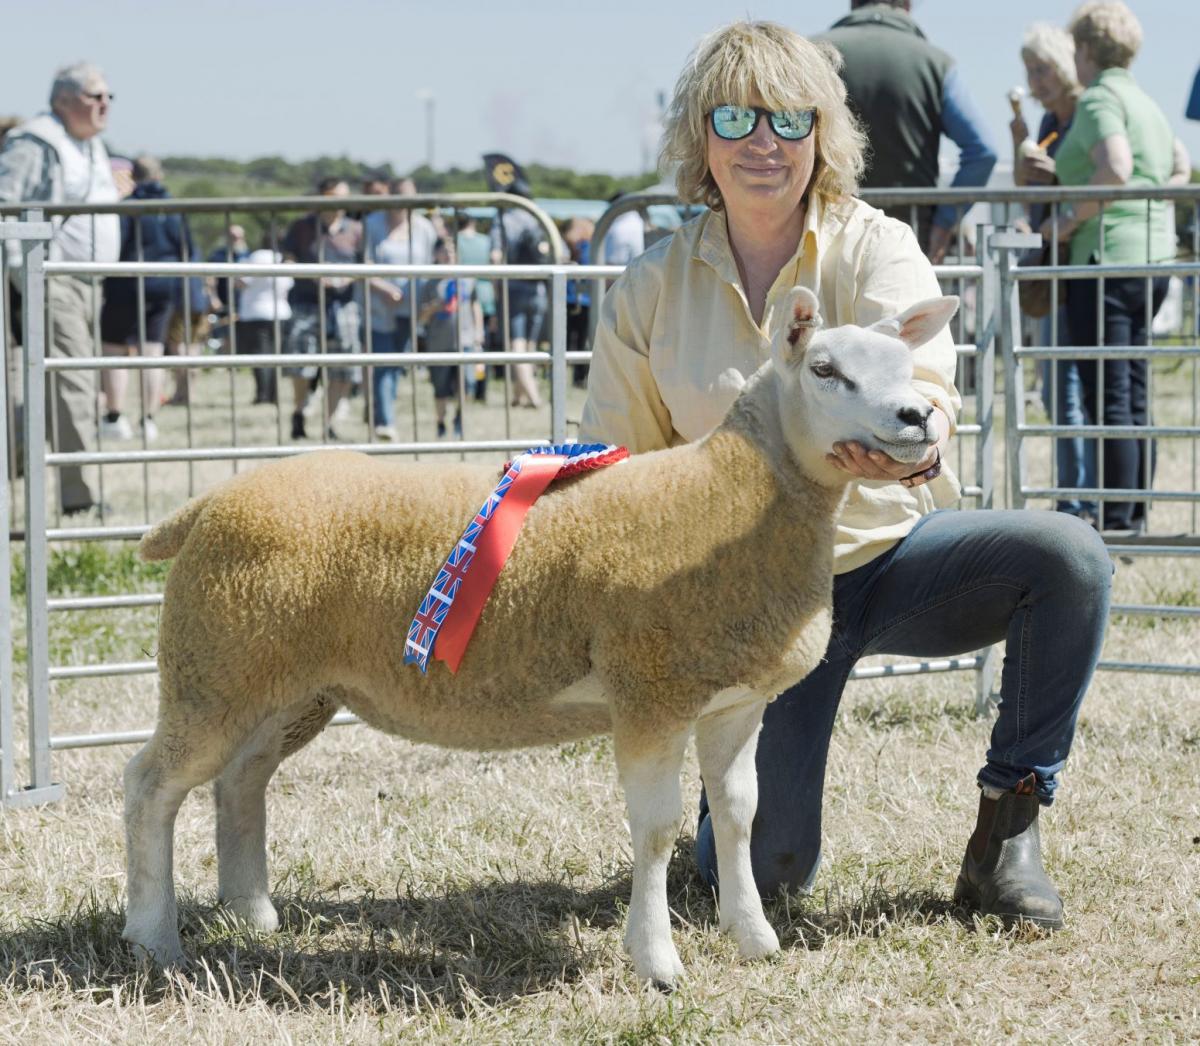 Kim Stretch won the Texel championship with a ewe lamb